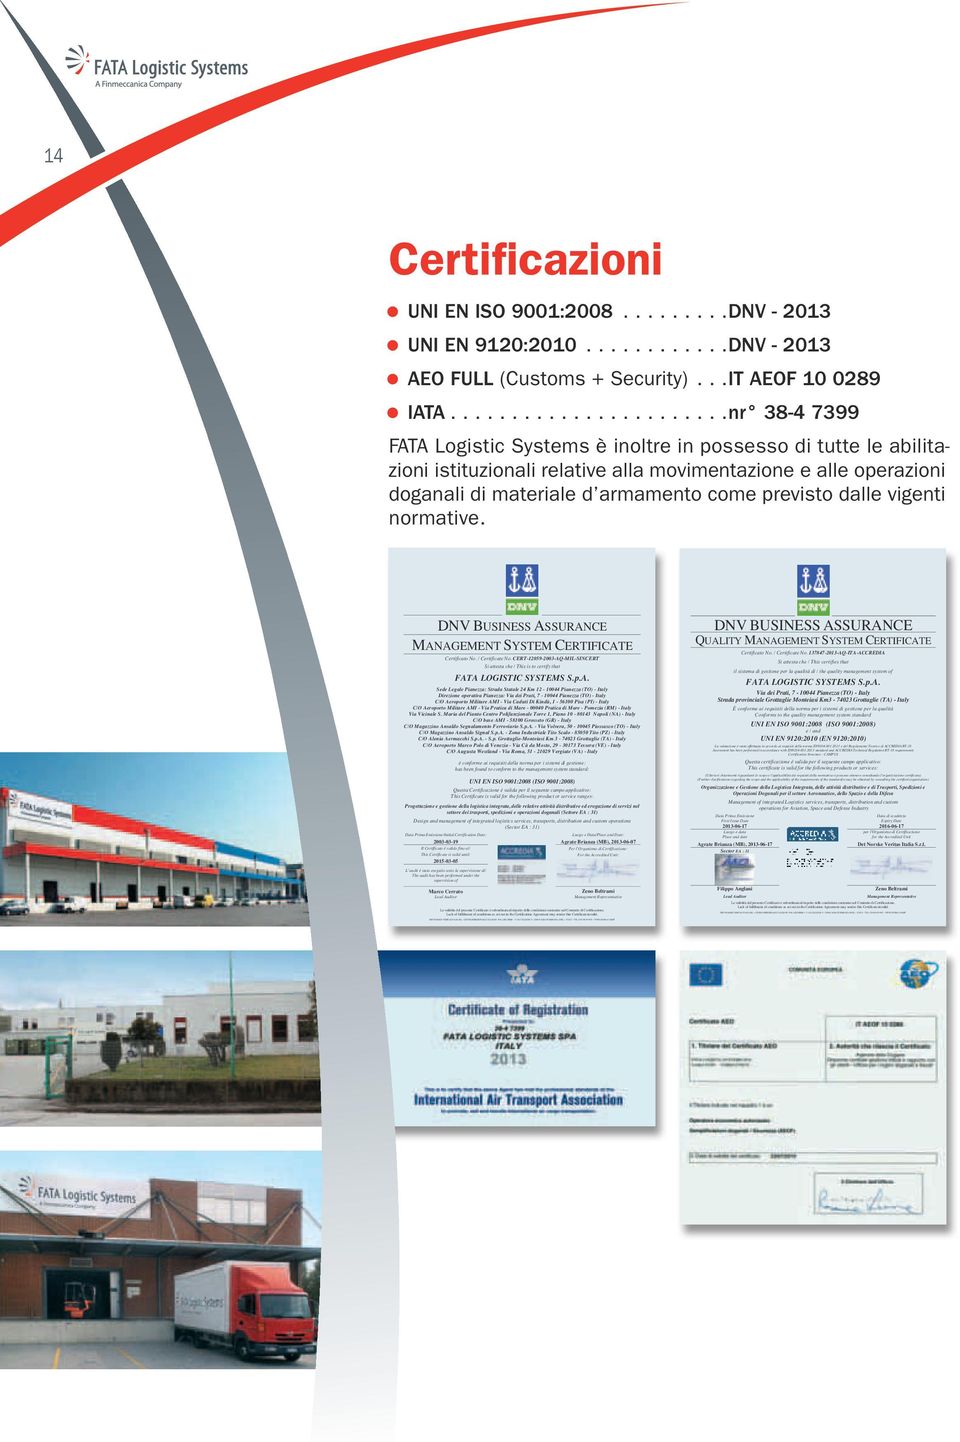 COM/IT COM/IT 14 Certificazioni UNI EN ISO 9001:2008.........DNV - 2013 UNI EN 9120:2010............DNV - 2013 AEO FULL (Customs + Security)...IT AEOF 10 0289 IATA.